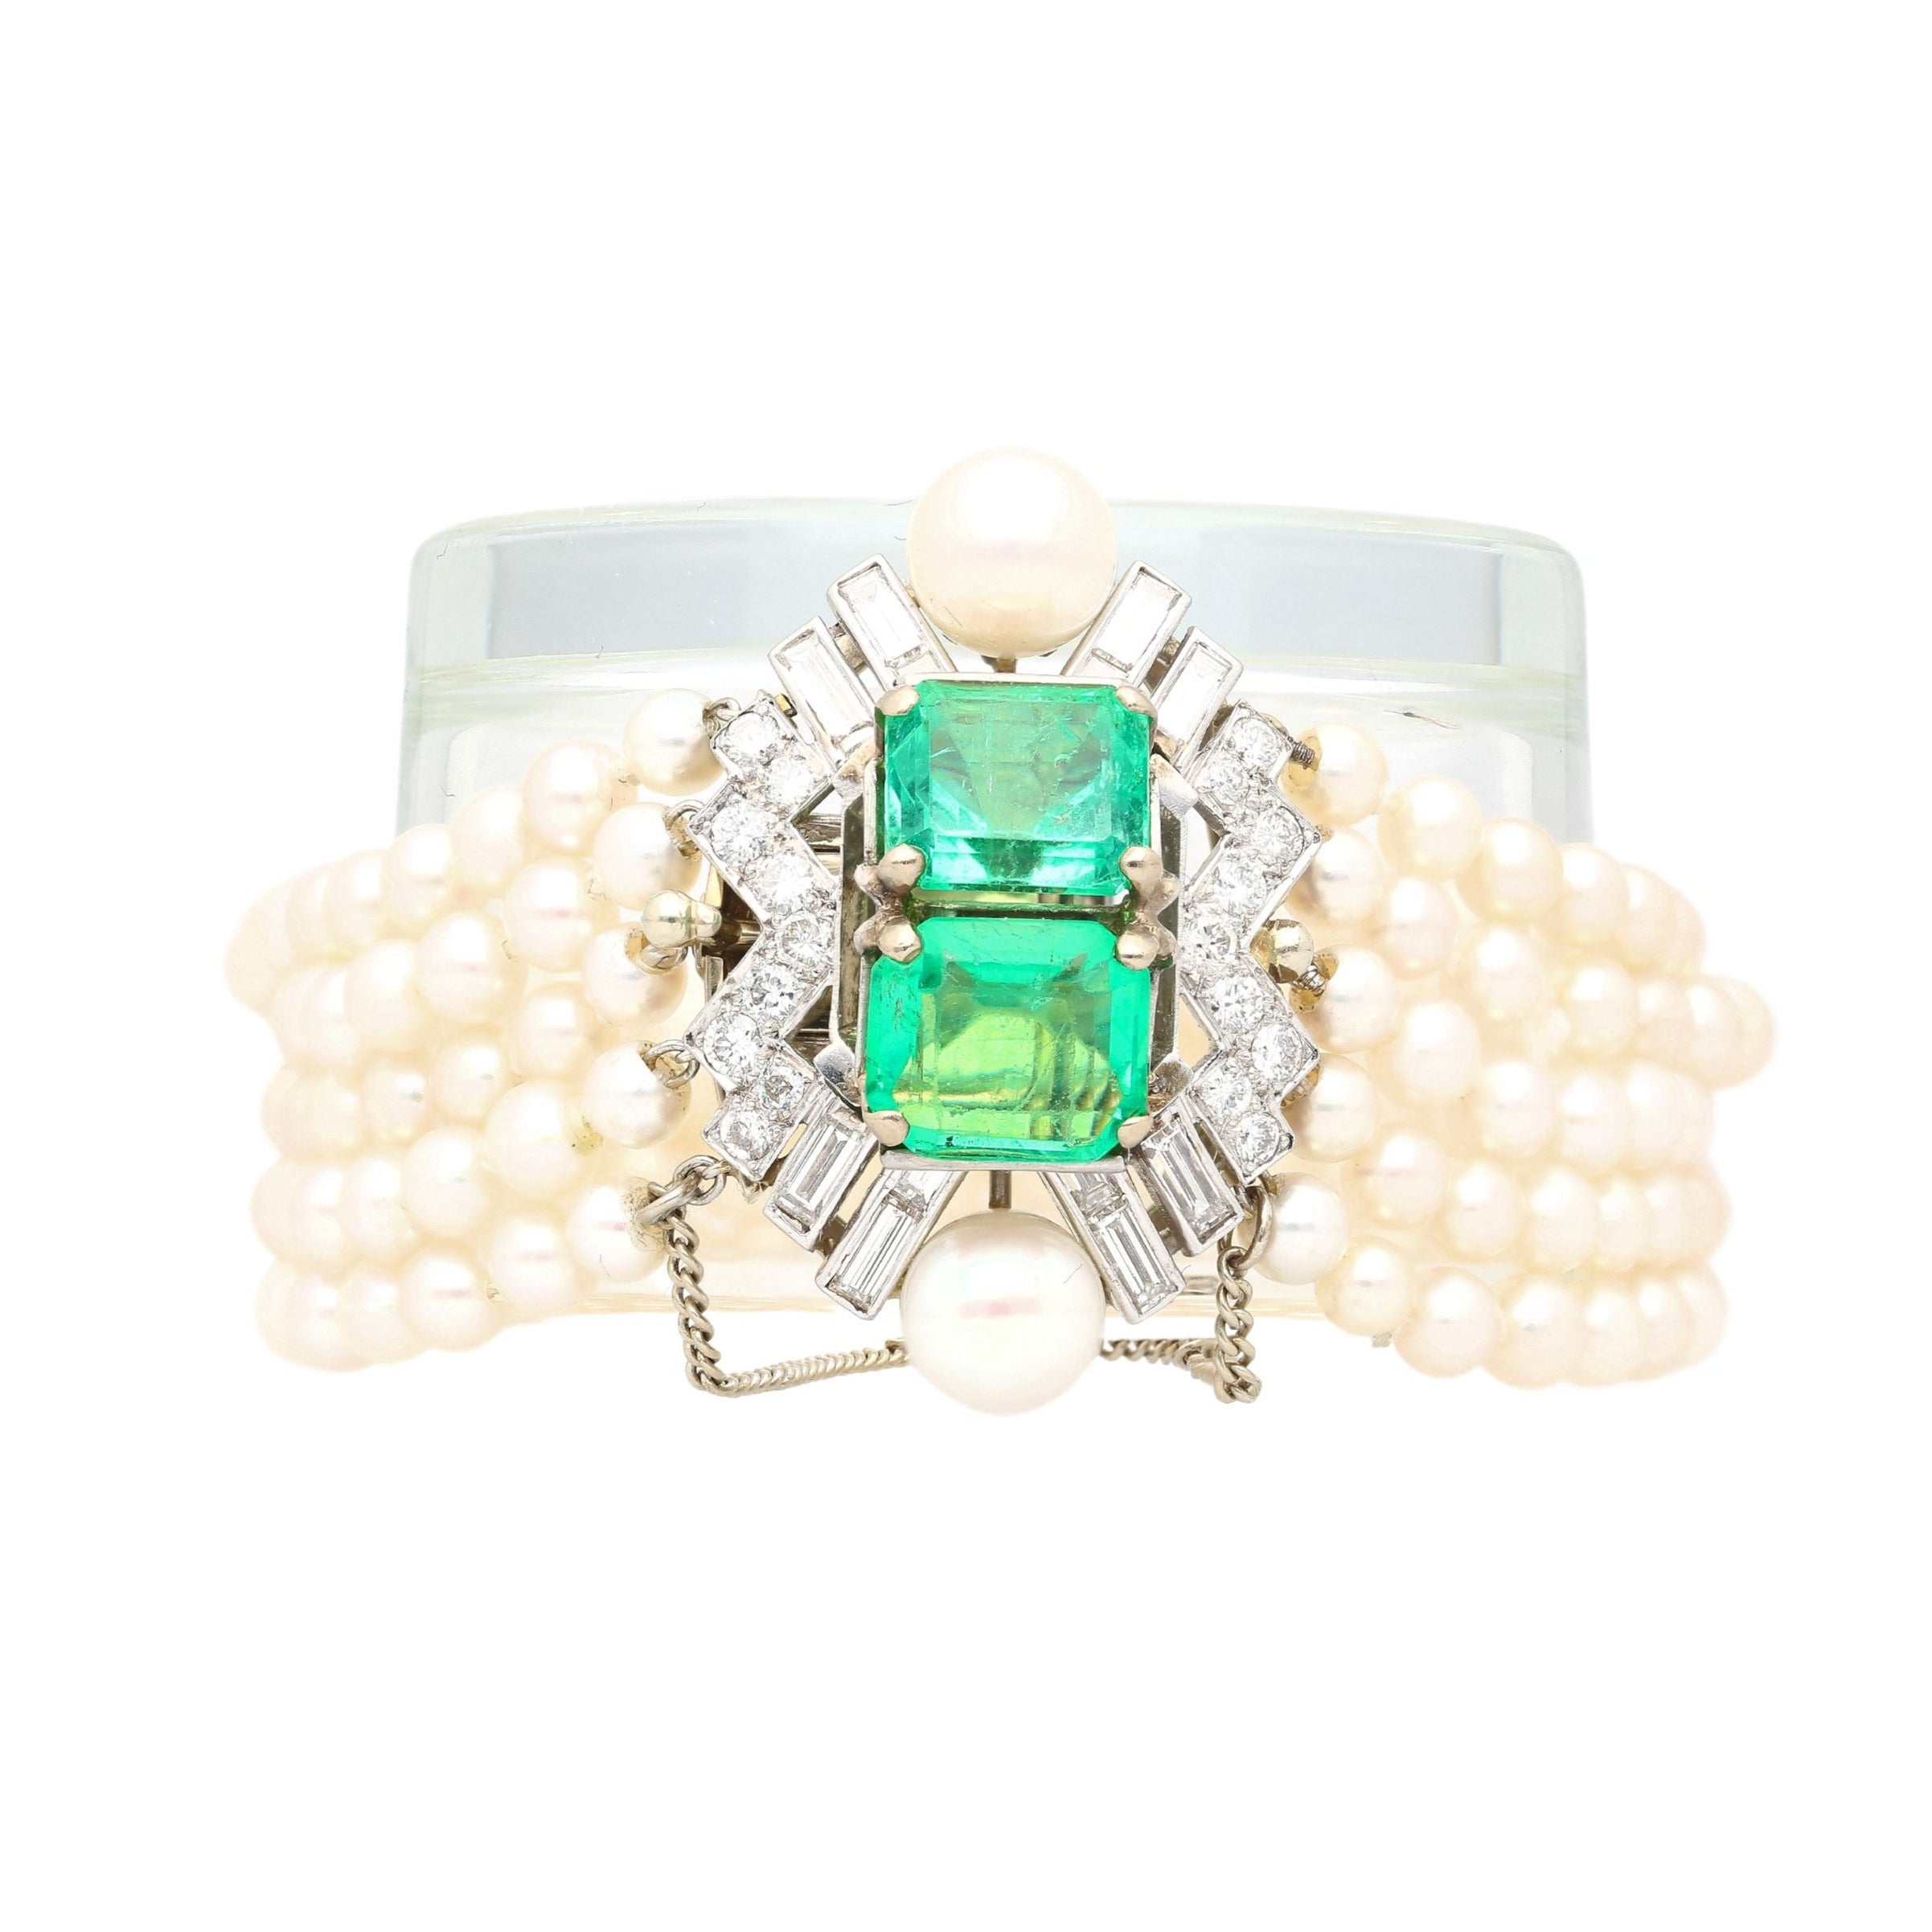 Art-Deco-Platinum-5-Row-Pearl-Bracelet-with-8-CTW-in-Emeralds-and-Diamonds-Bracelet.jpg